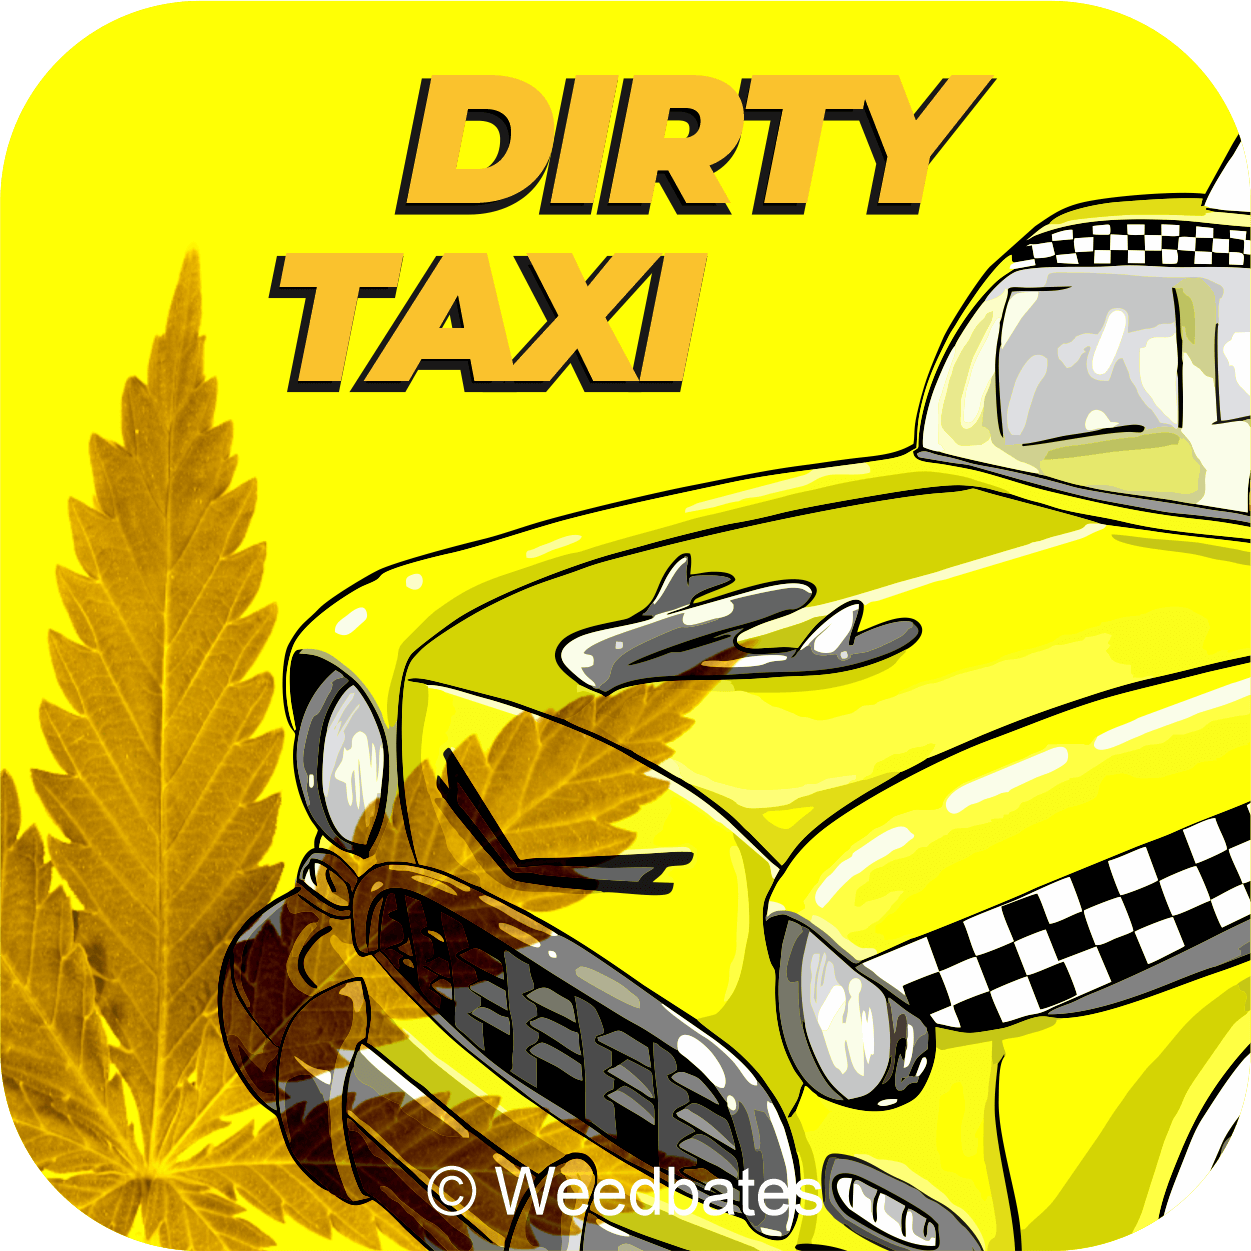 Dirty Taxi strain